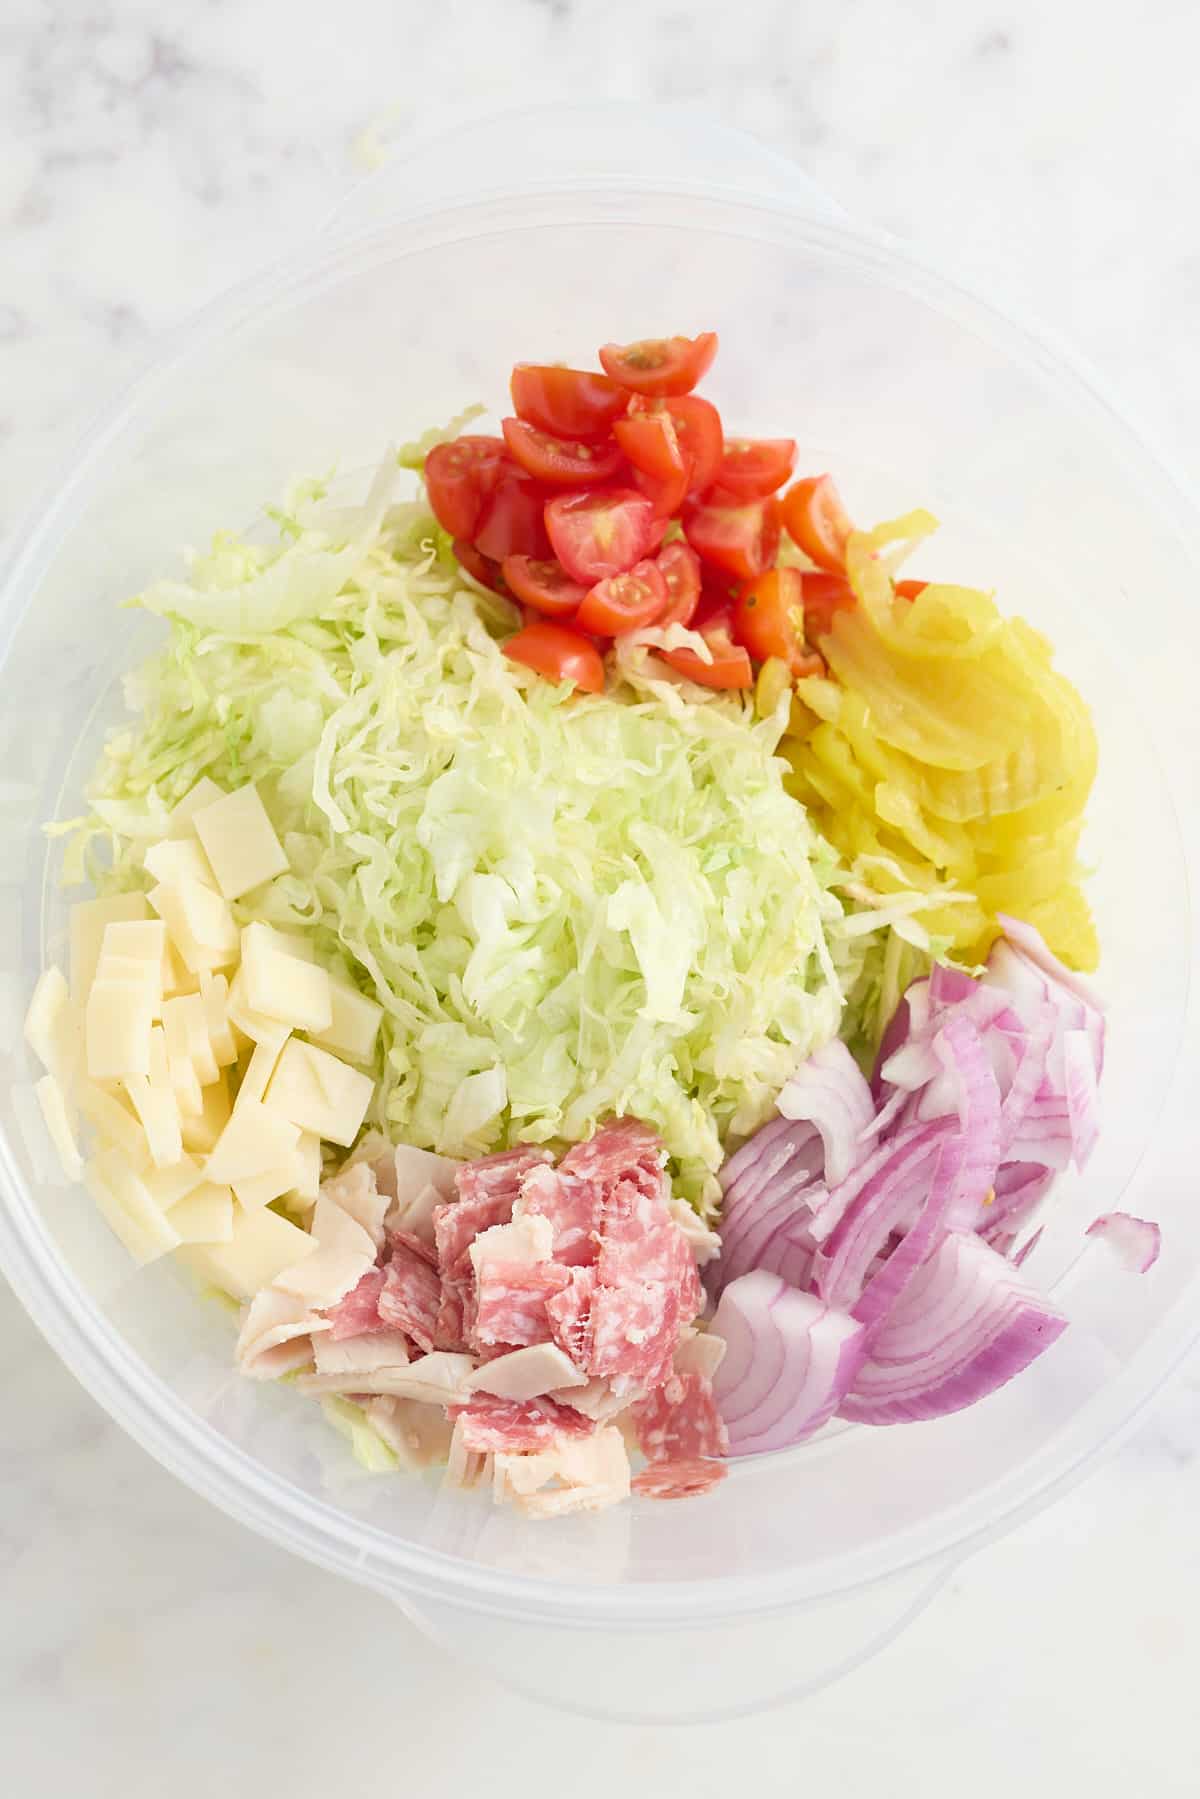 salad base ingredients in bowl